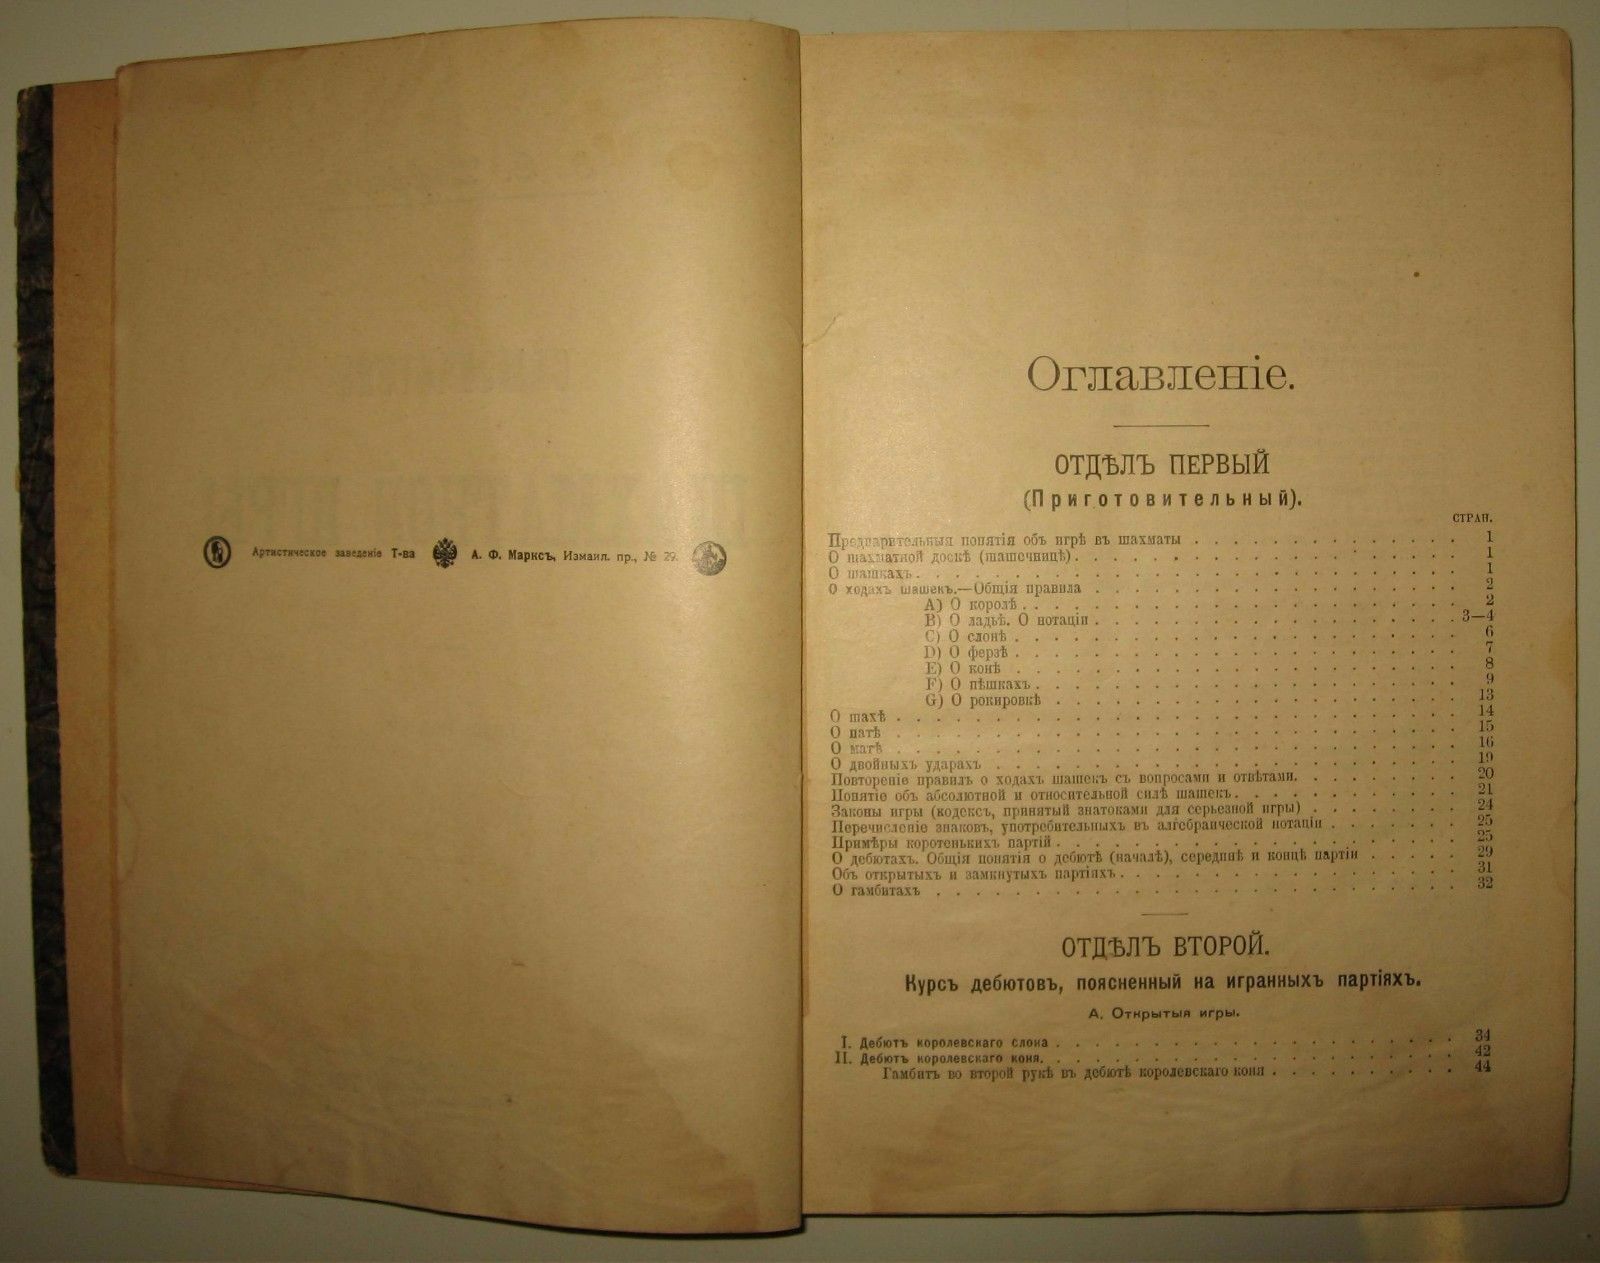 10862.Antique Russian Chess Book: E. Schiffers. Tutorial chess. St. Petersburg